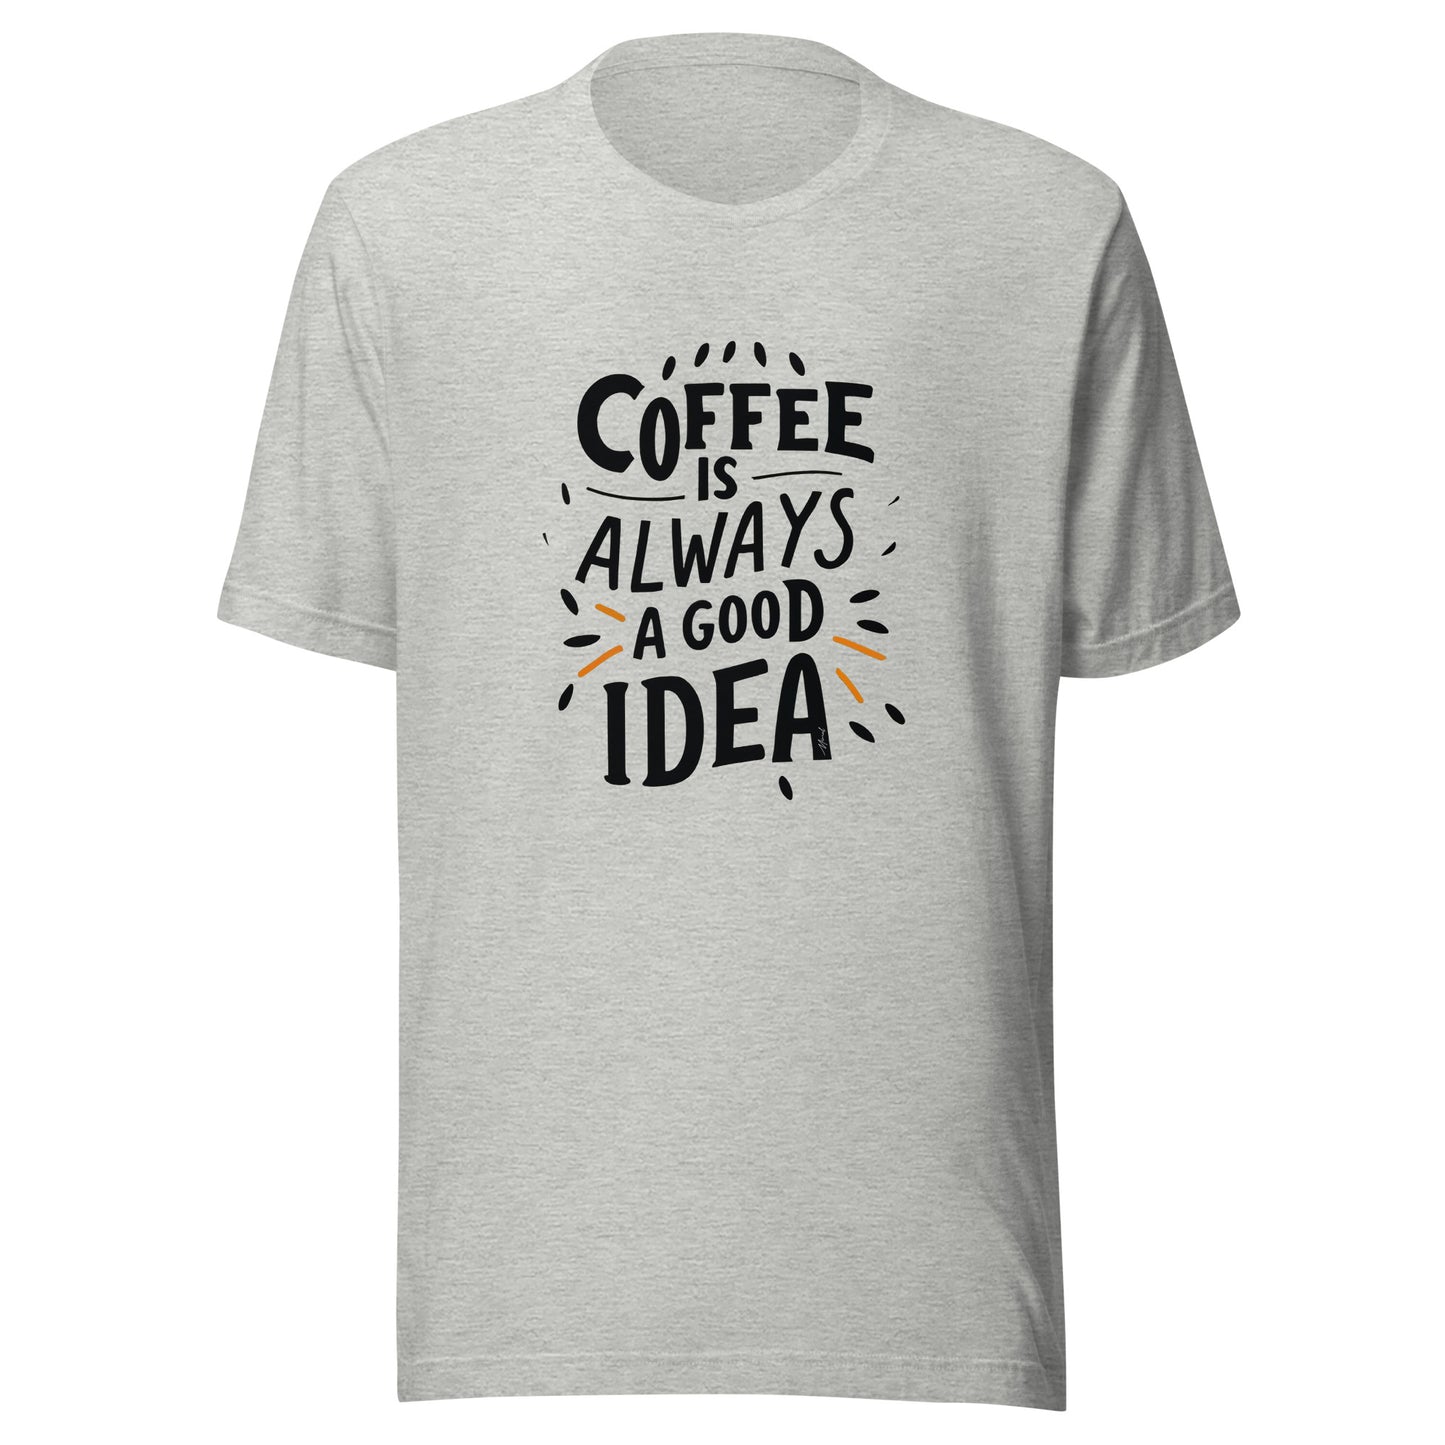 Coffee is always a good idea (Unisex)